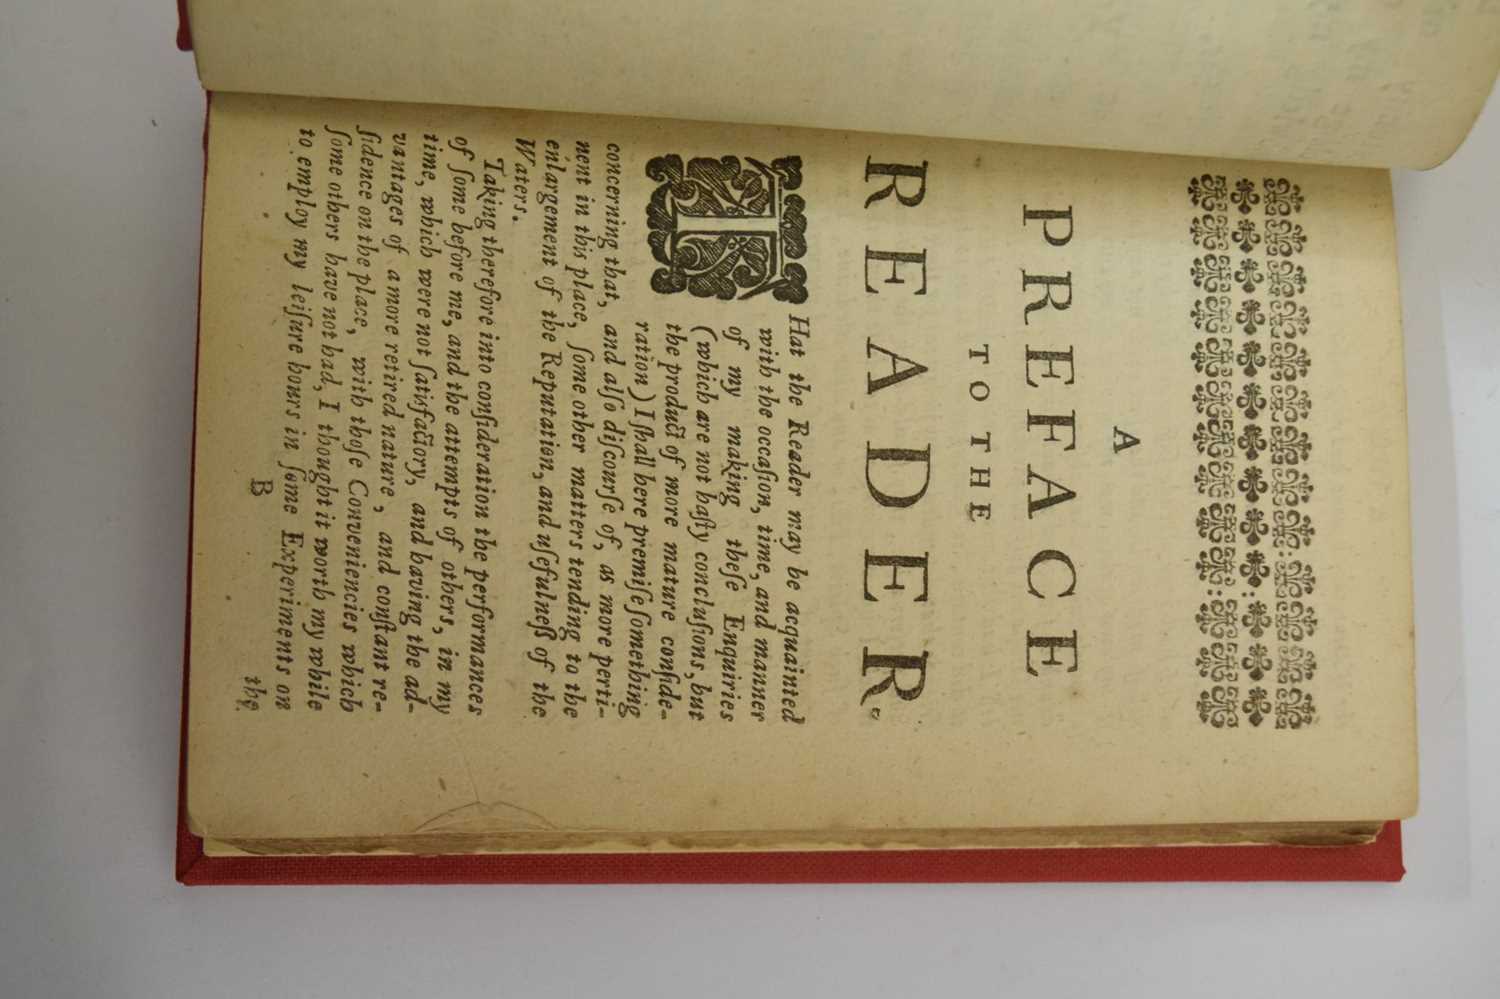 Guidott, Thomas M. B. - 'Discourse of Bathe' - First edition 1676 - Image 3 of 6